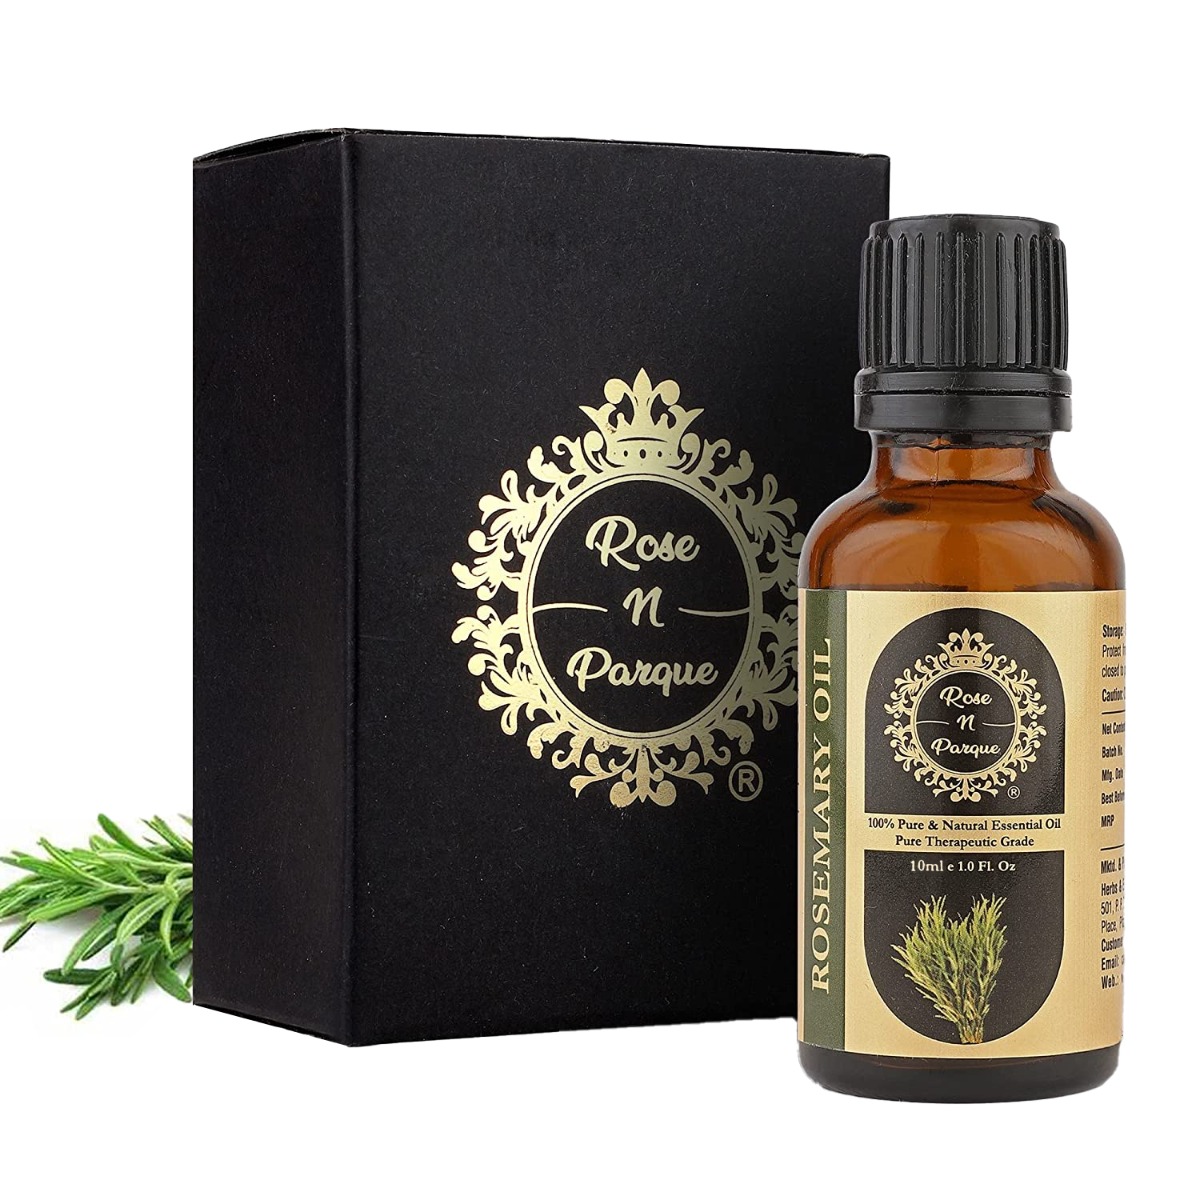 RosenParque 100% Pure & Natural Rosemary Essential Oil, 10ml